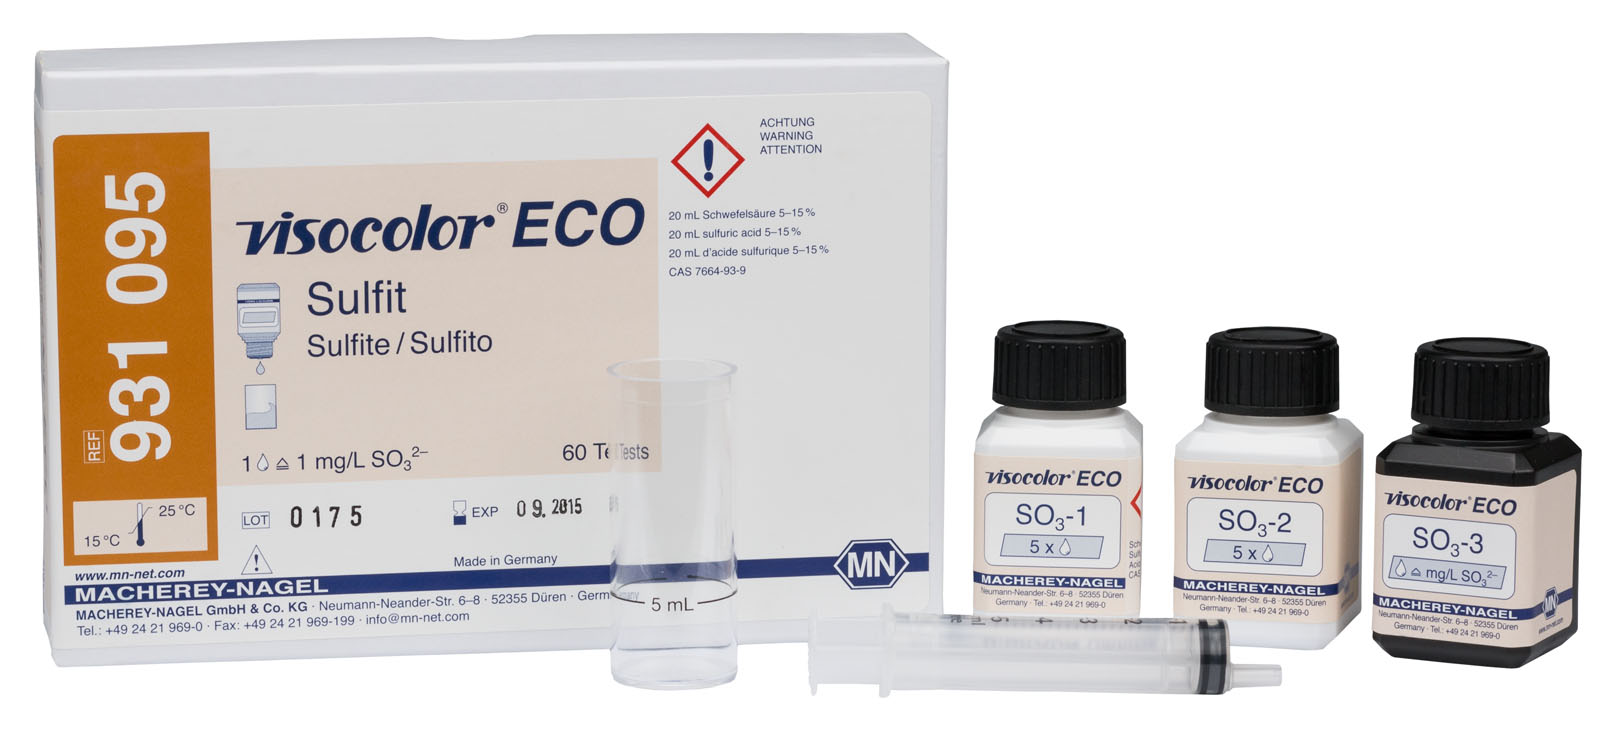 VISOCOLOR® ECO Sulphite Test Kit